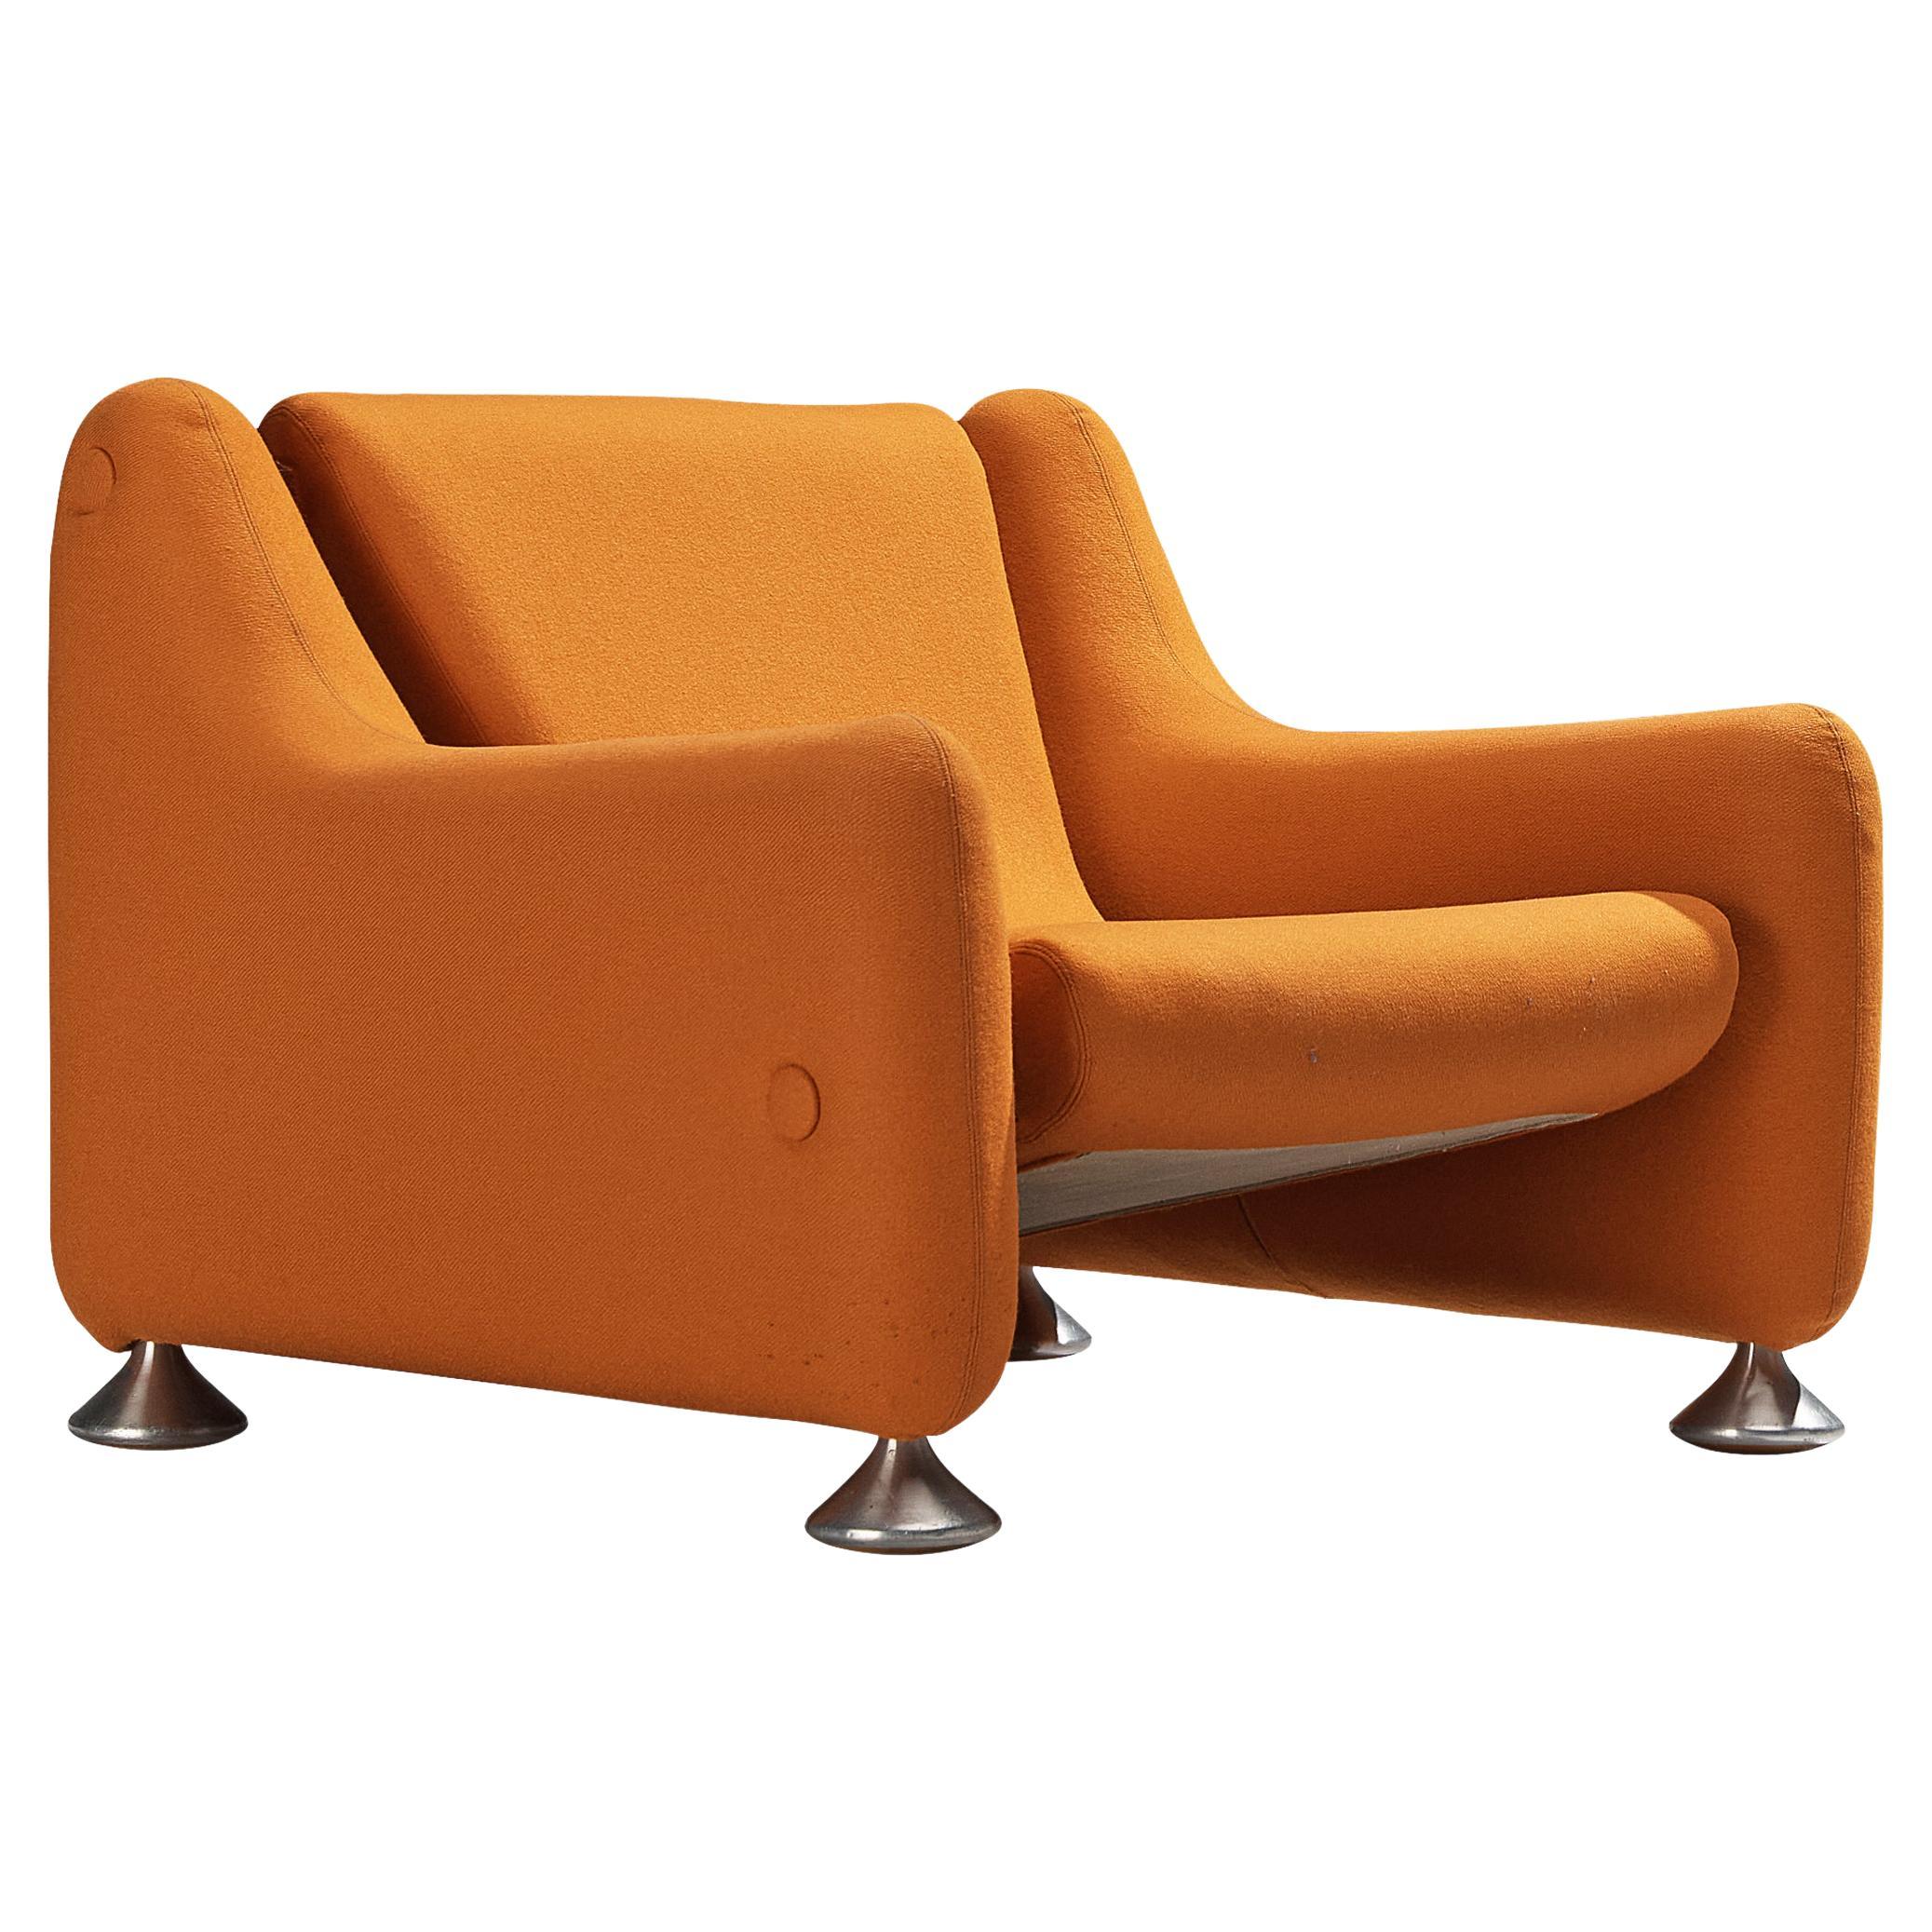 Rare Luigi Colani for Fritz Hansen Lounge Chair in Orange Upholstery For Sale